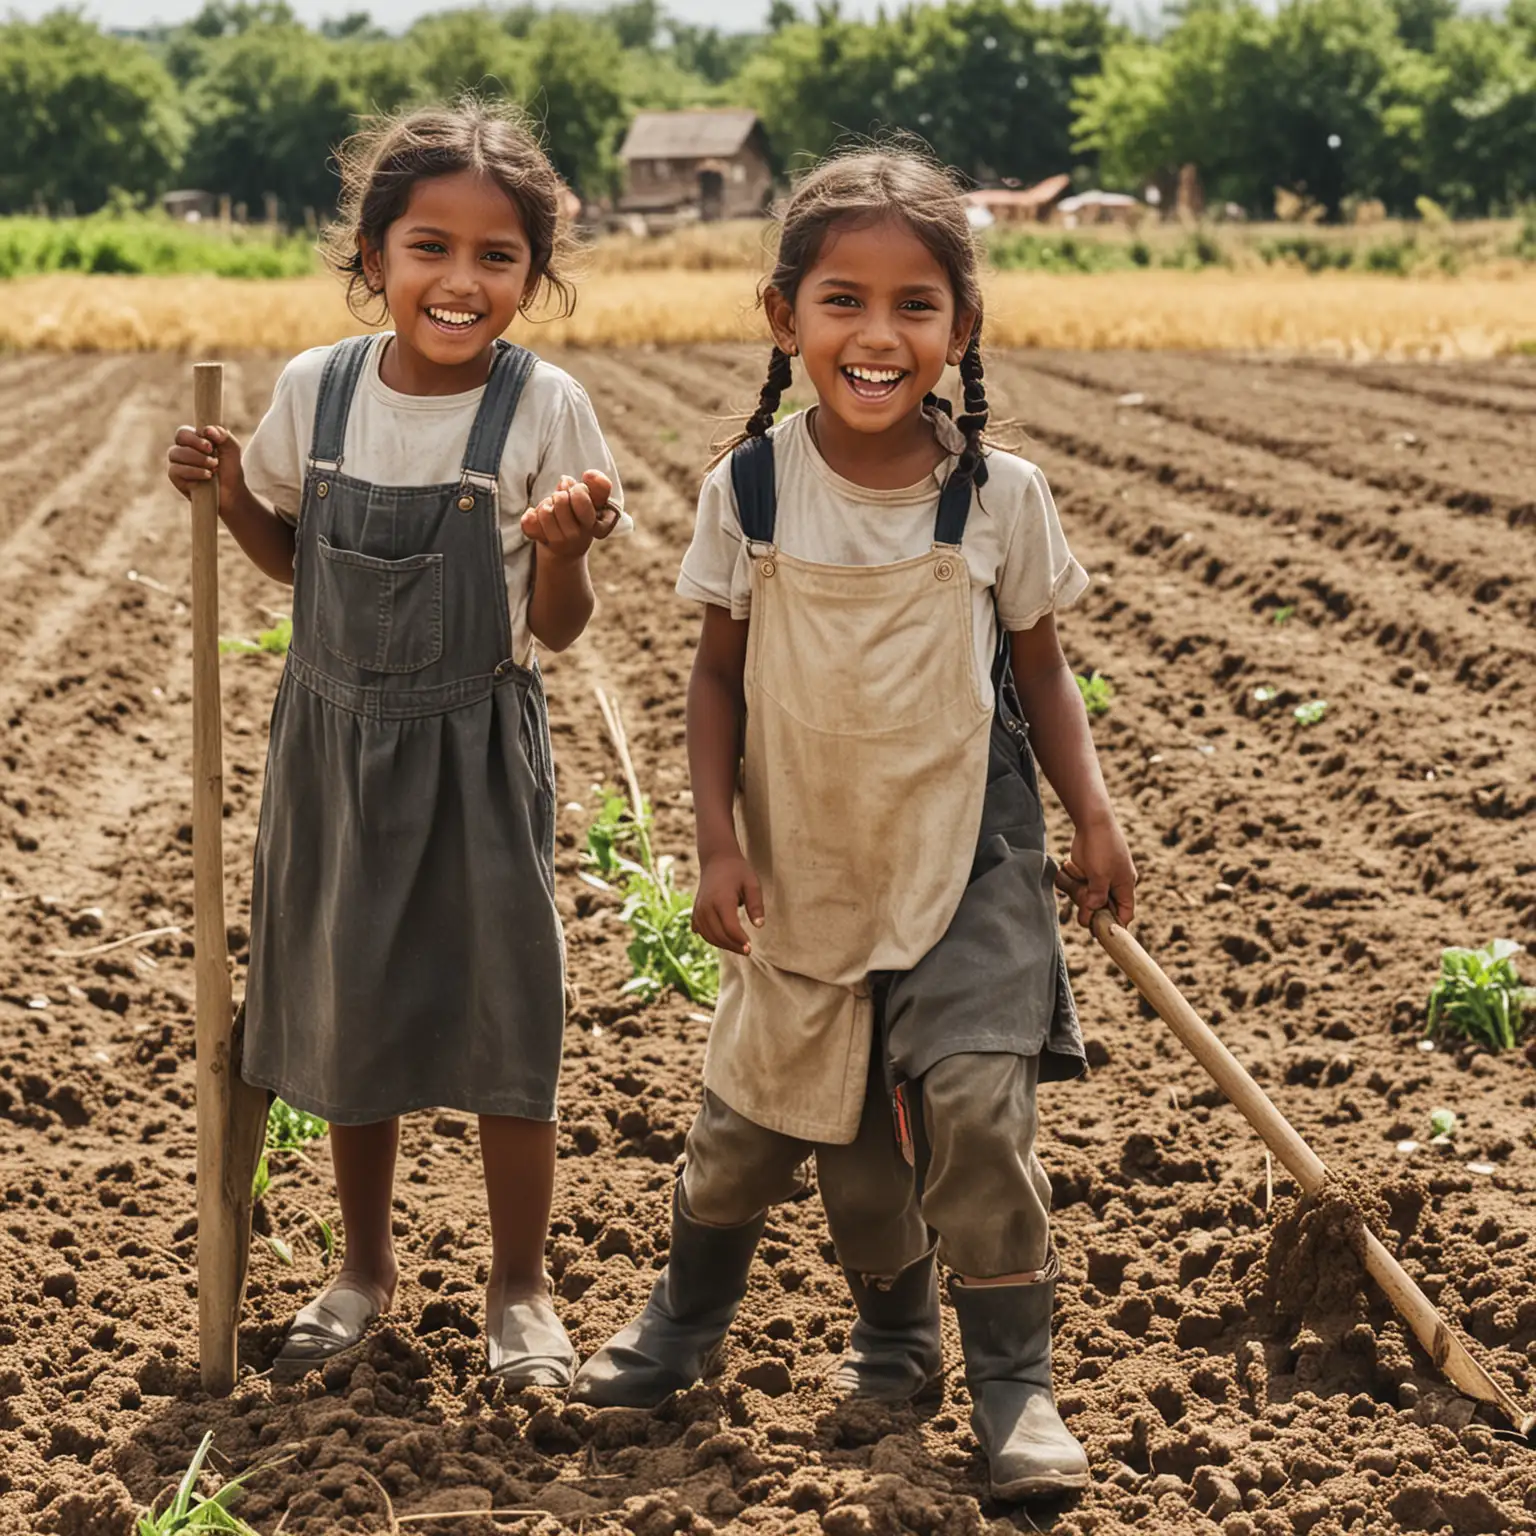 Children looking happy working in the fields. 